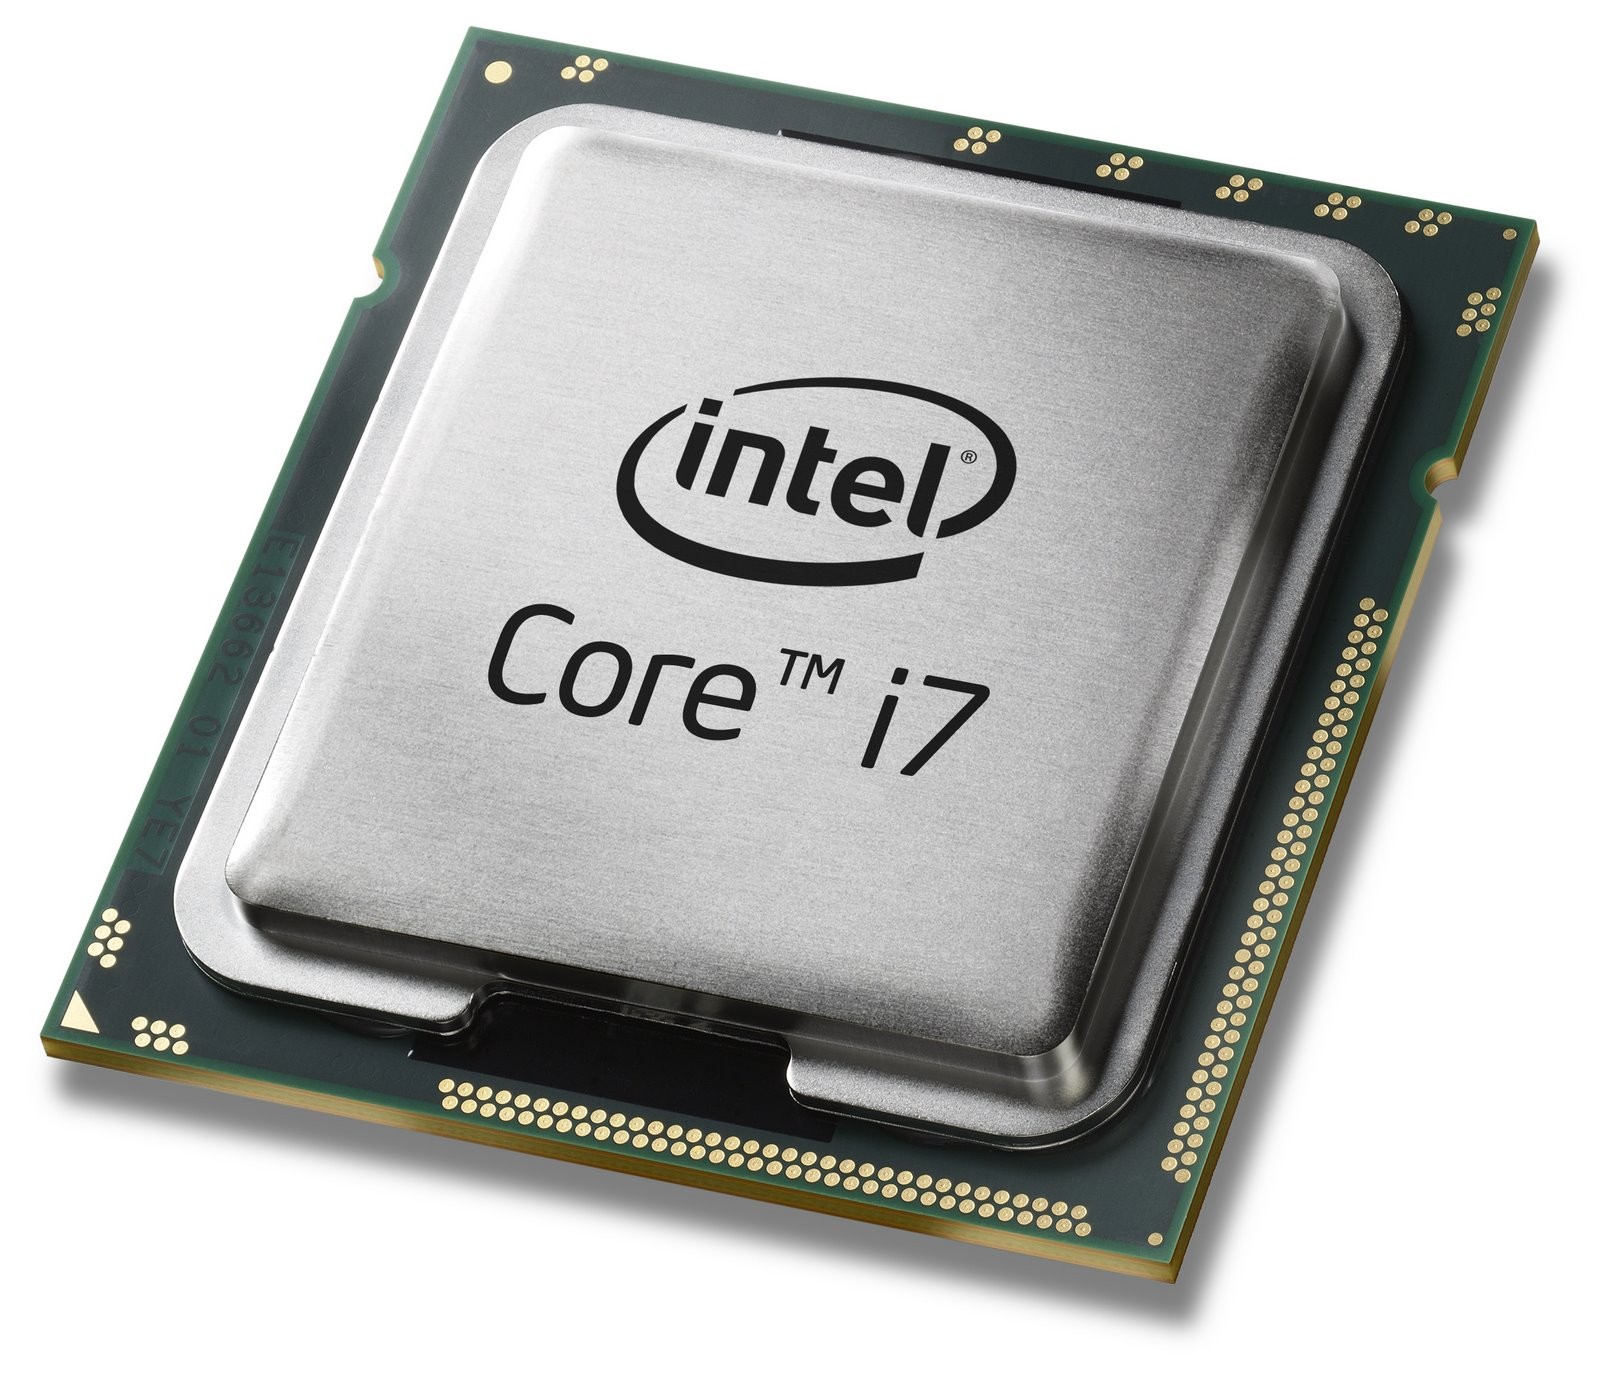 500030202-Intel Core i7-2600K SR00C 3.4Ghz 5GT/s LGA 1155 Processor-image